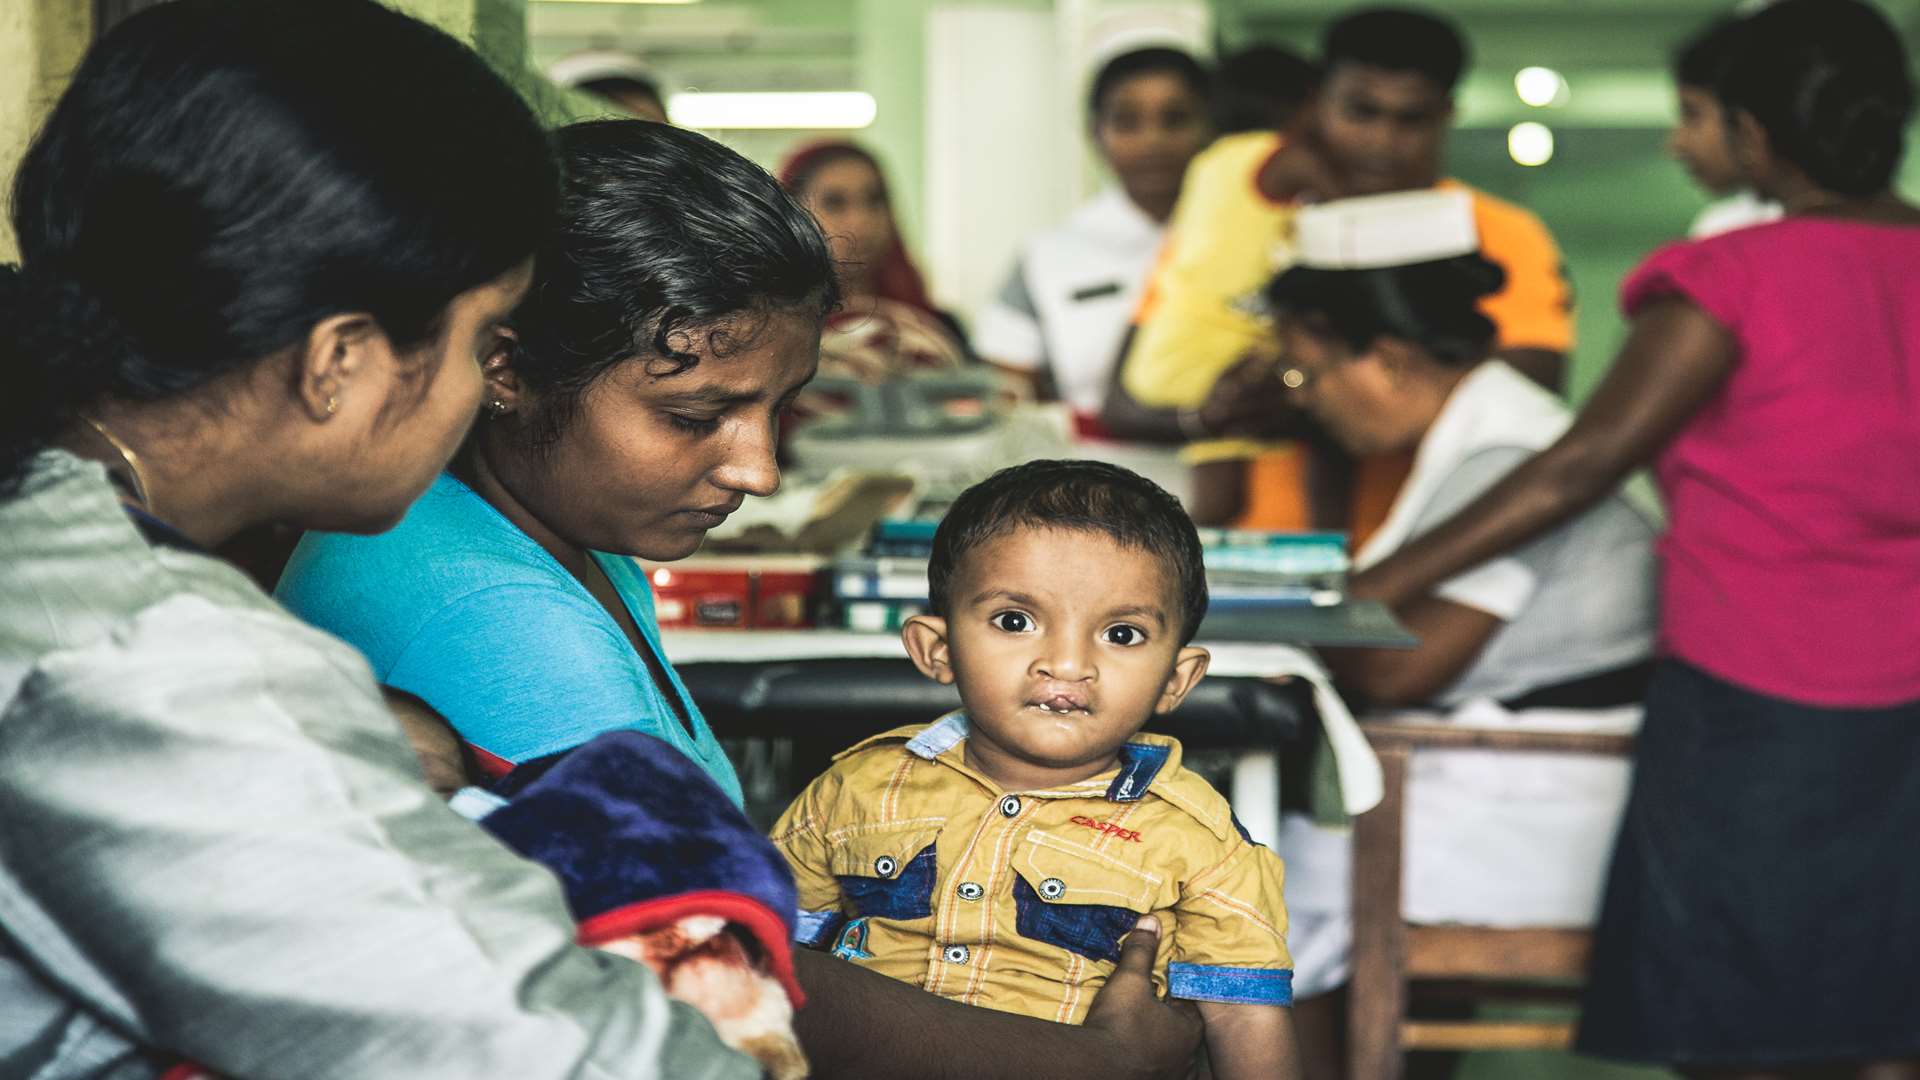 A sick child at the hospital in Sri Lanka